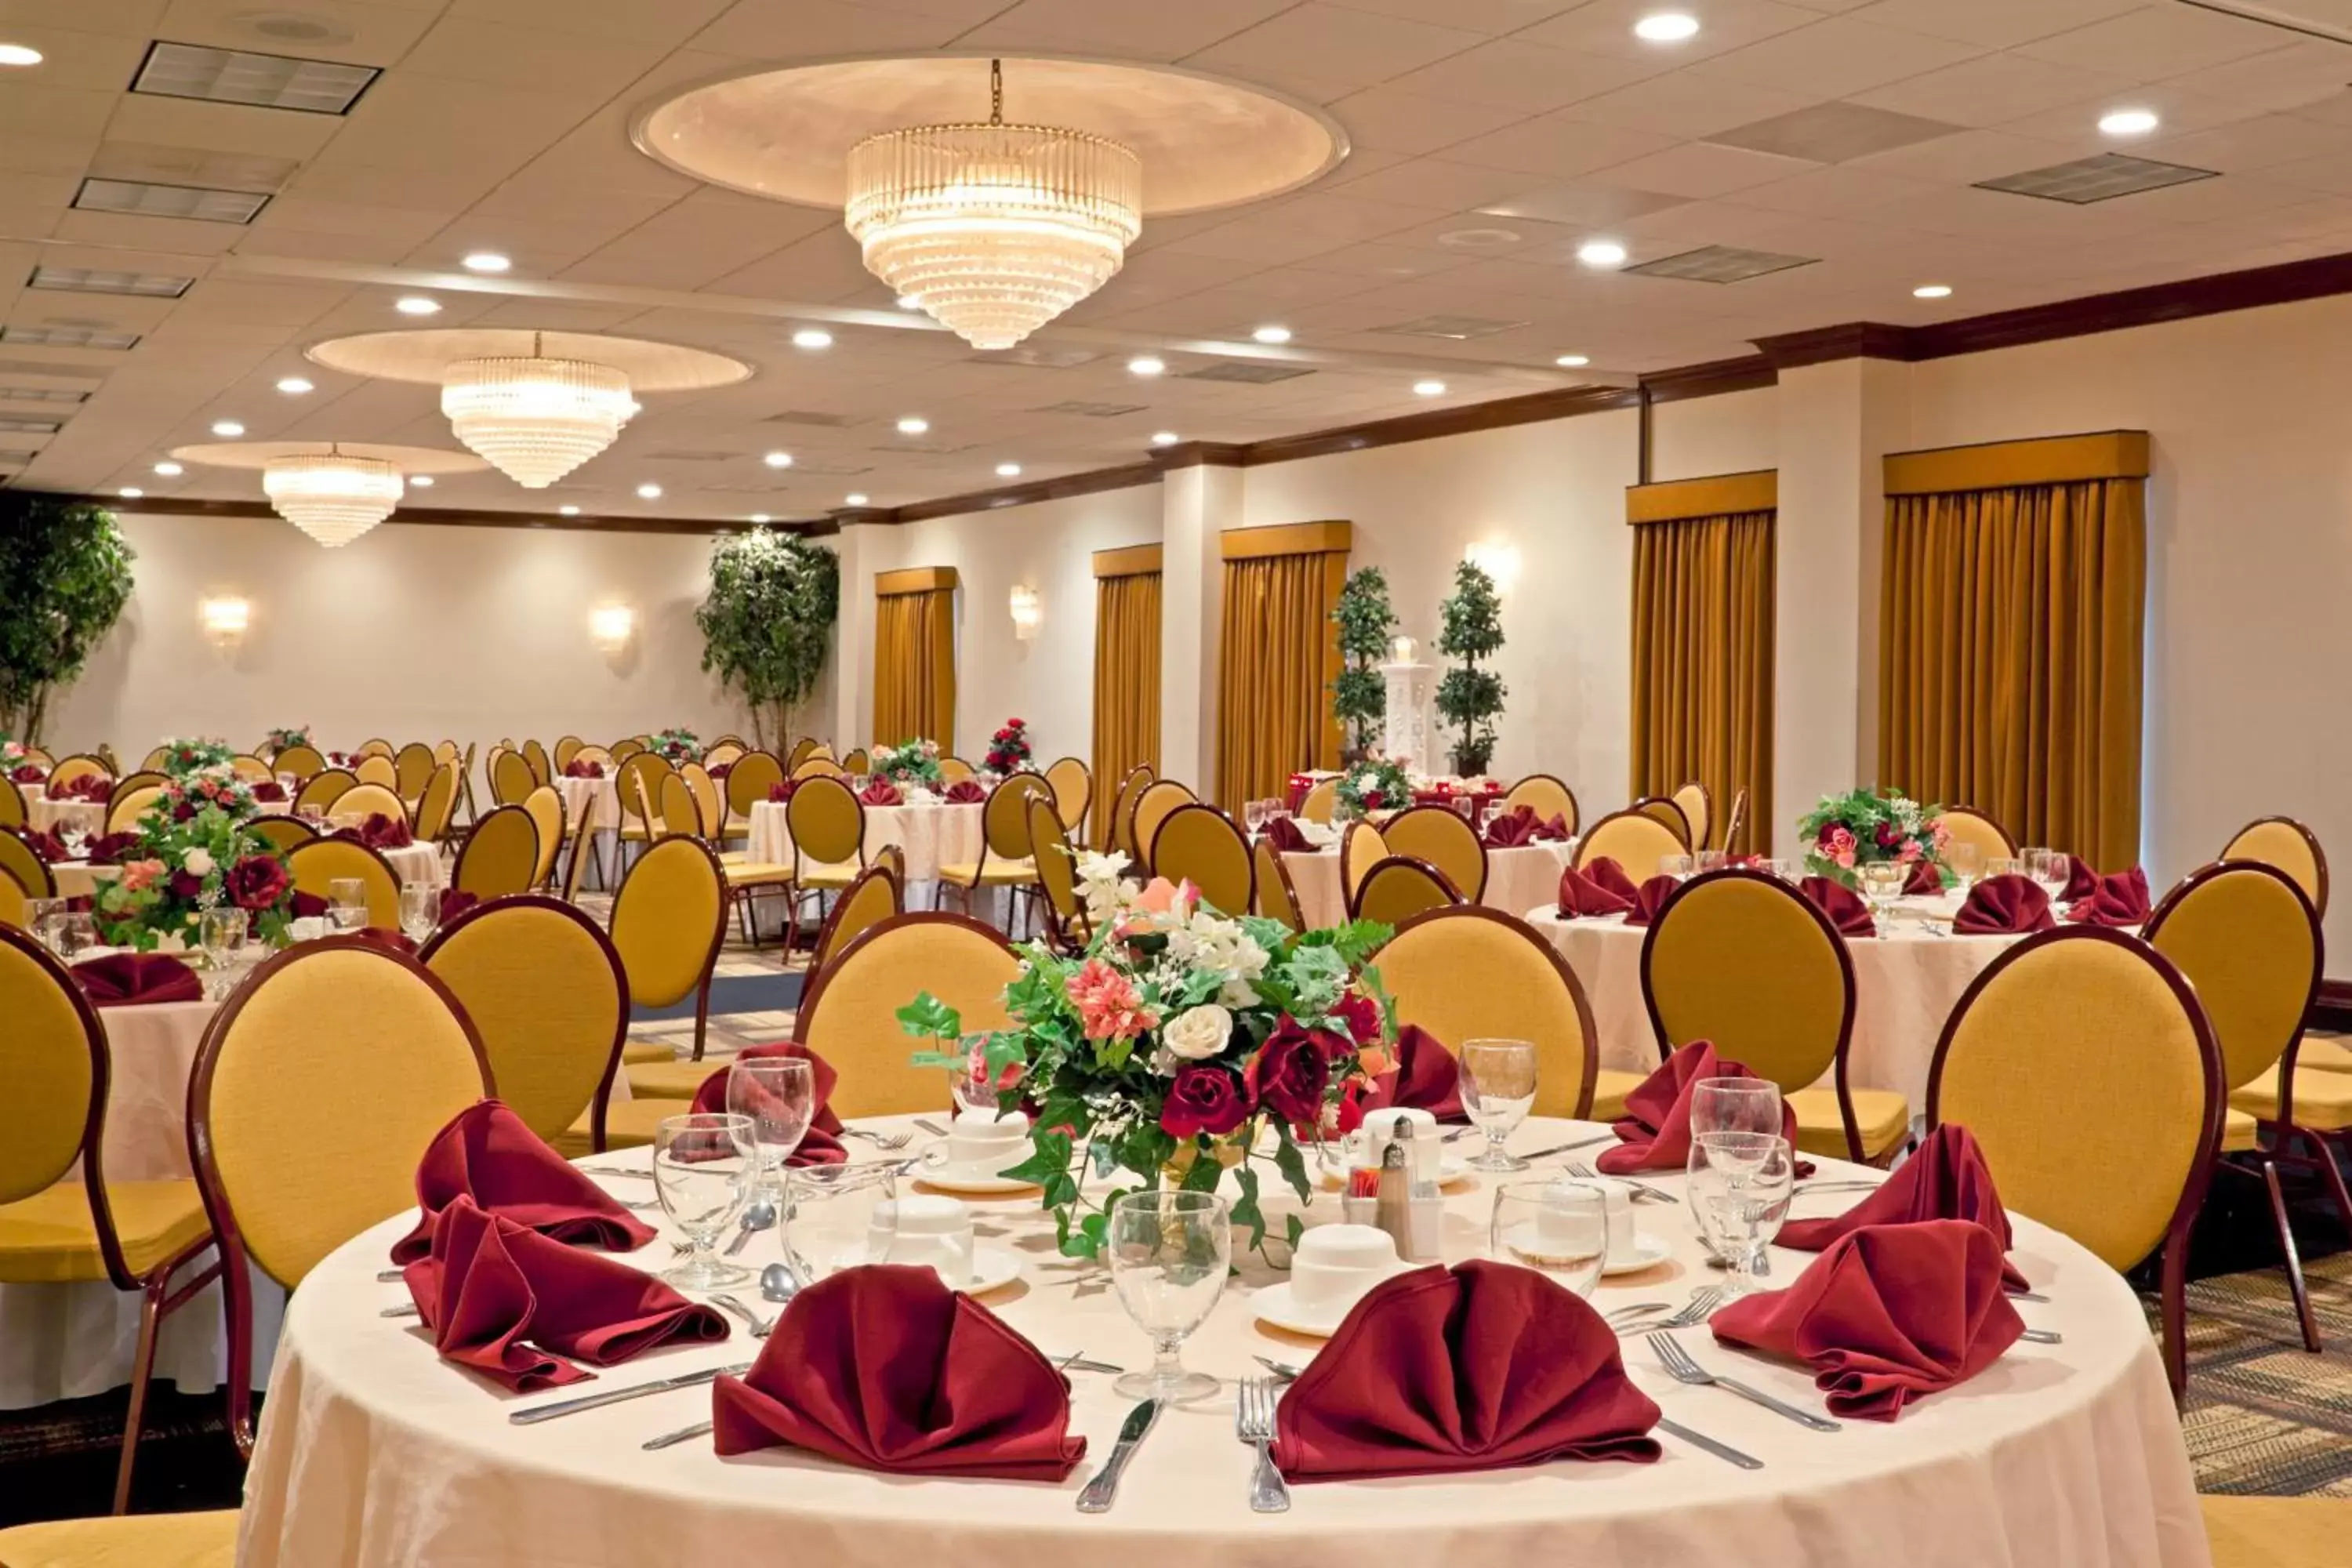 Banquet/Function facilities, Banquet Facilities in Wyndham Garden Totowa